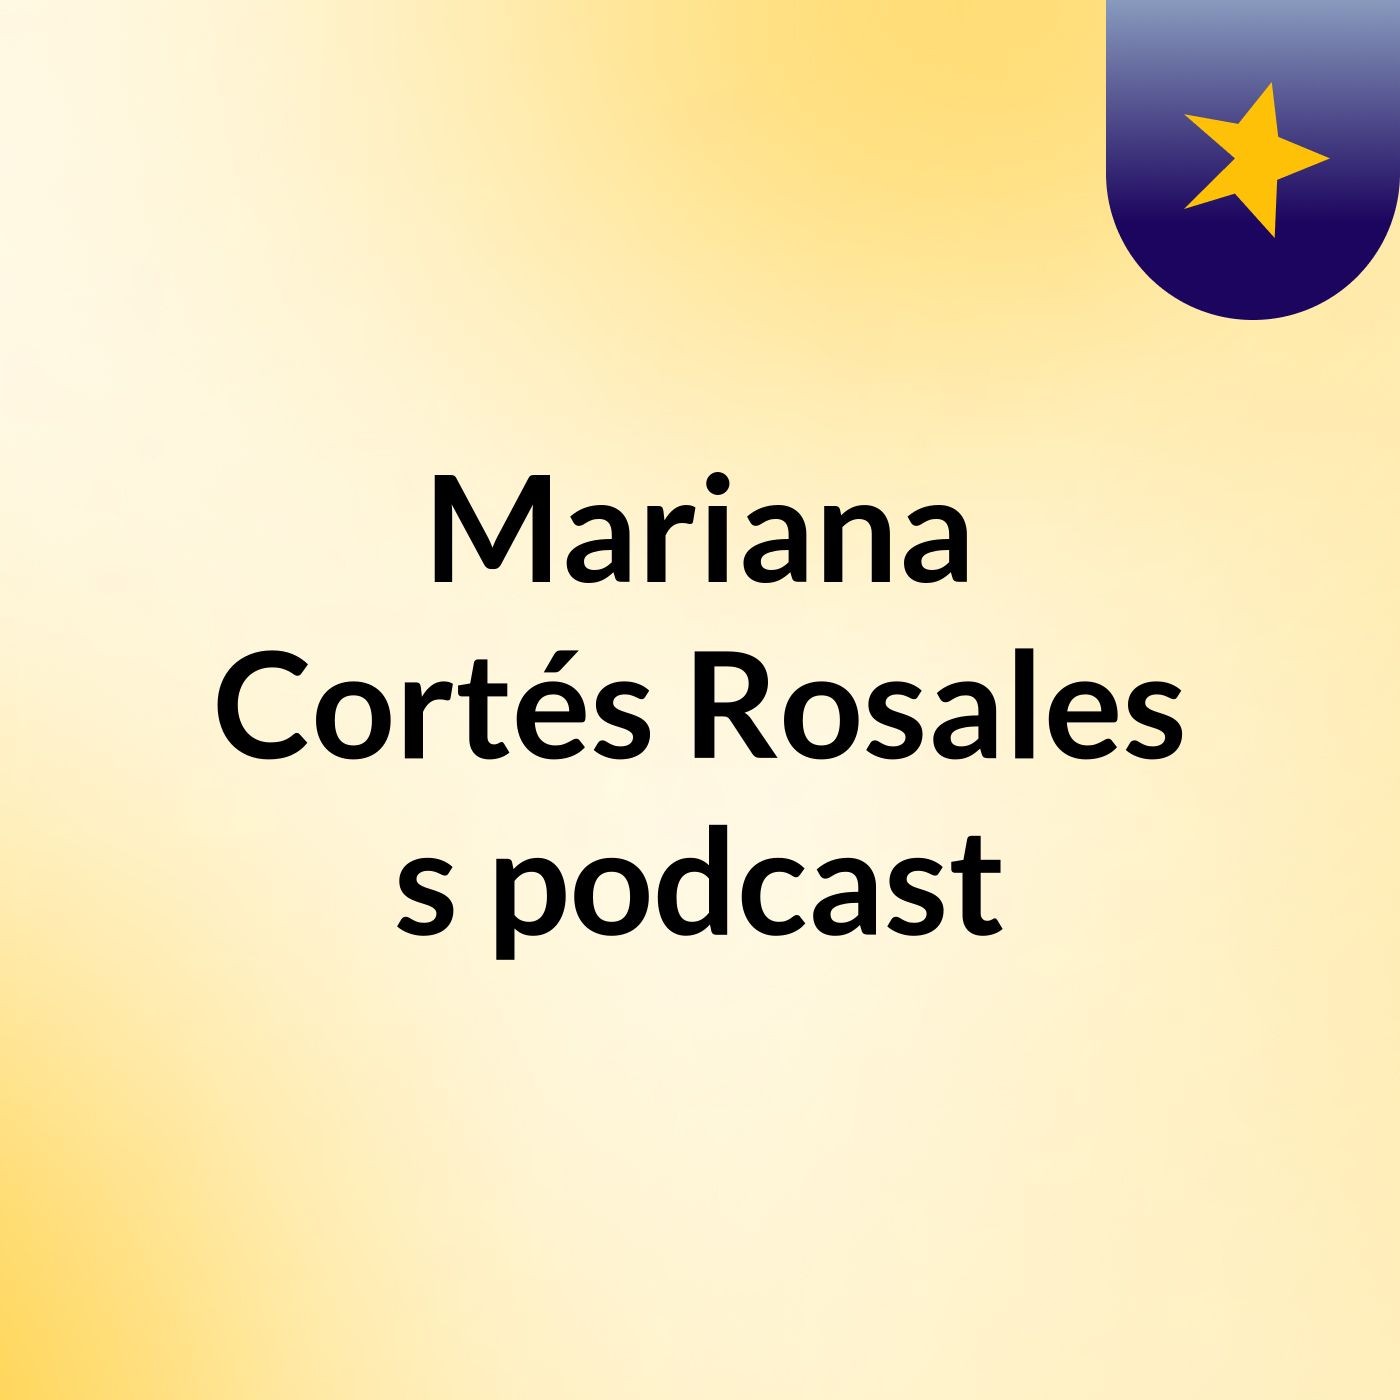 Mariana Cortés Rosales's podcast